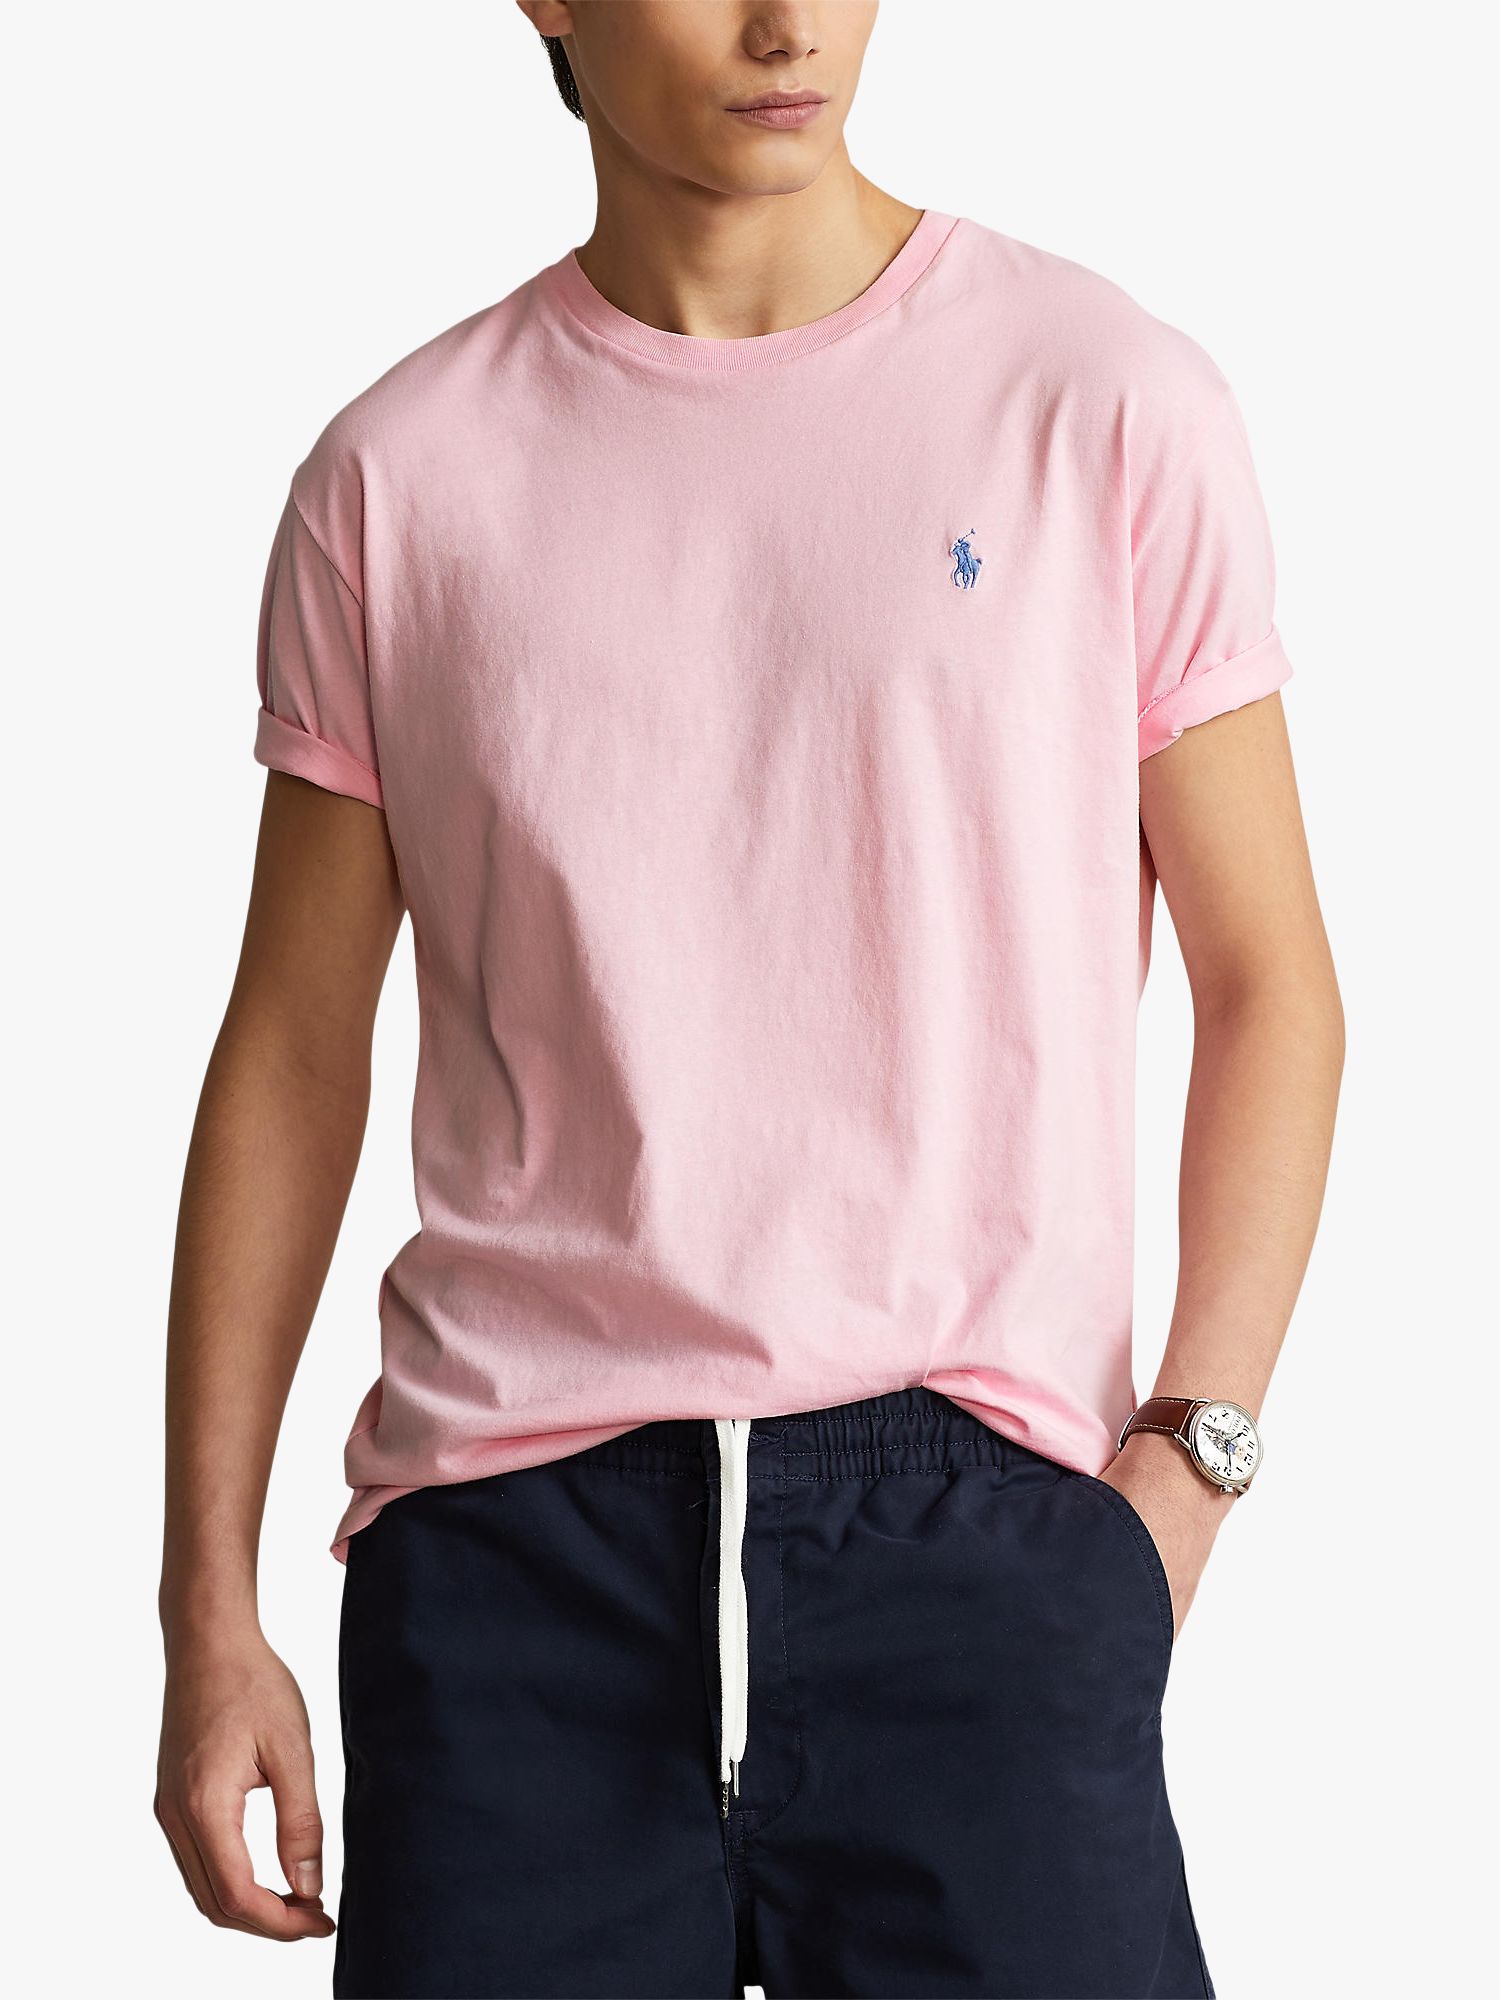 Polo Ralph Lauren Vintage Slim T-Shirt, Pink at John Lewis & Partners